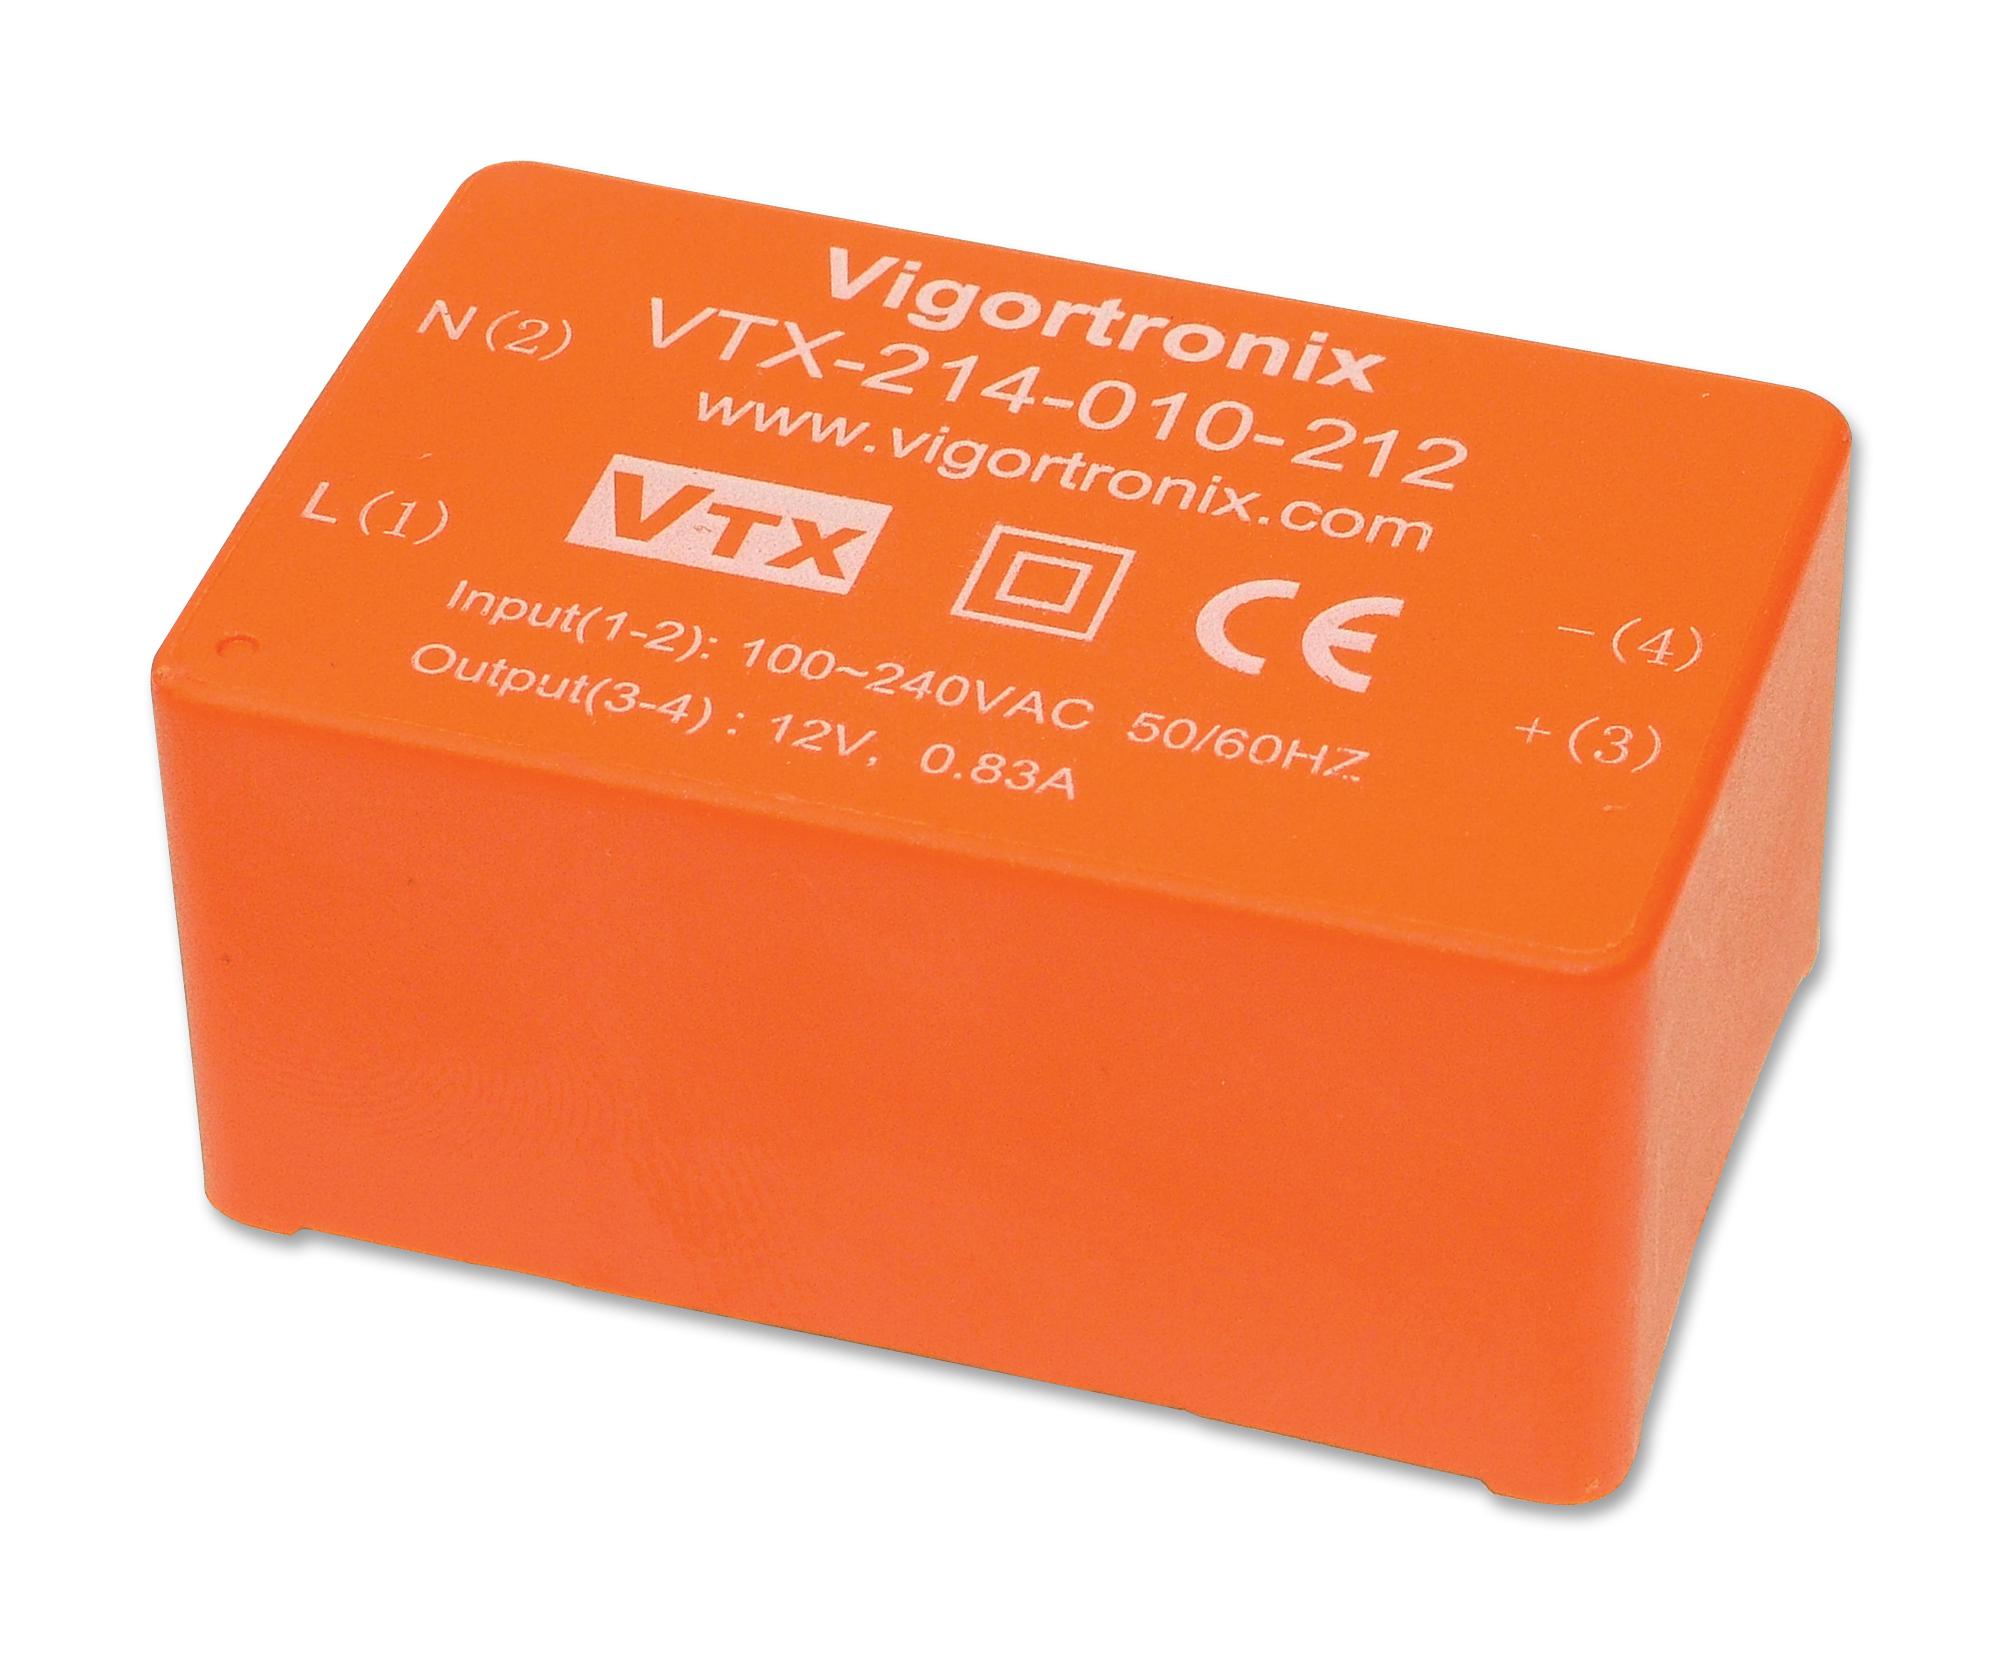 VTX-214-010-205 POWER SUPPLY, AC-DC, 5V, 2A VIGORTRONIX